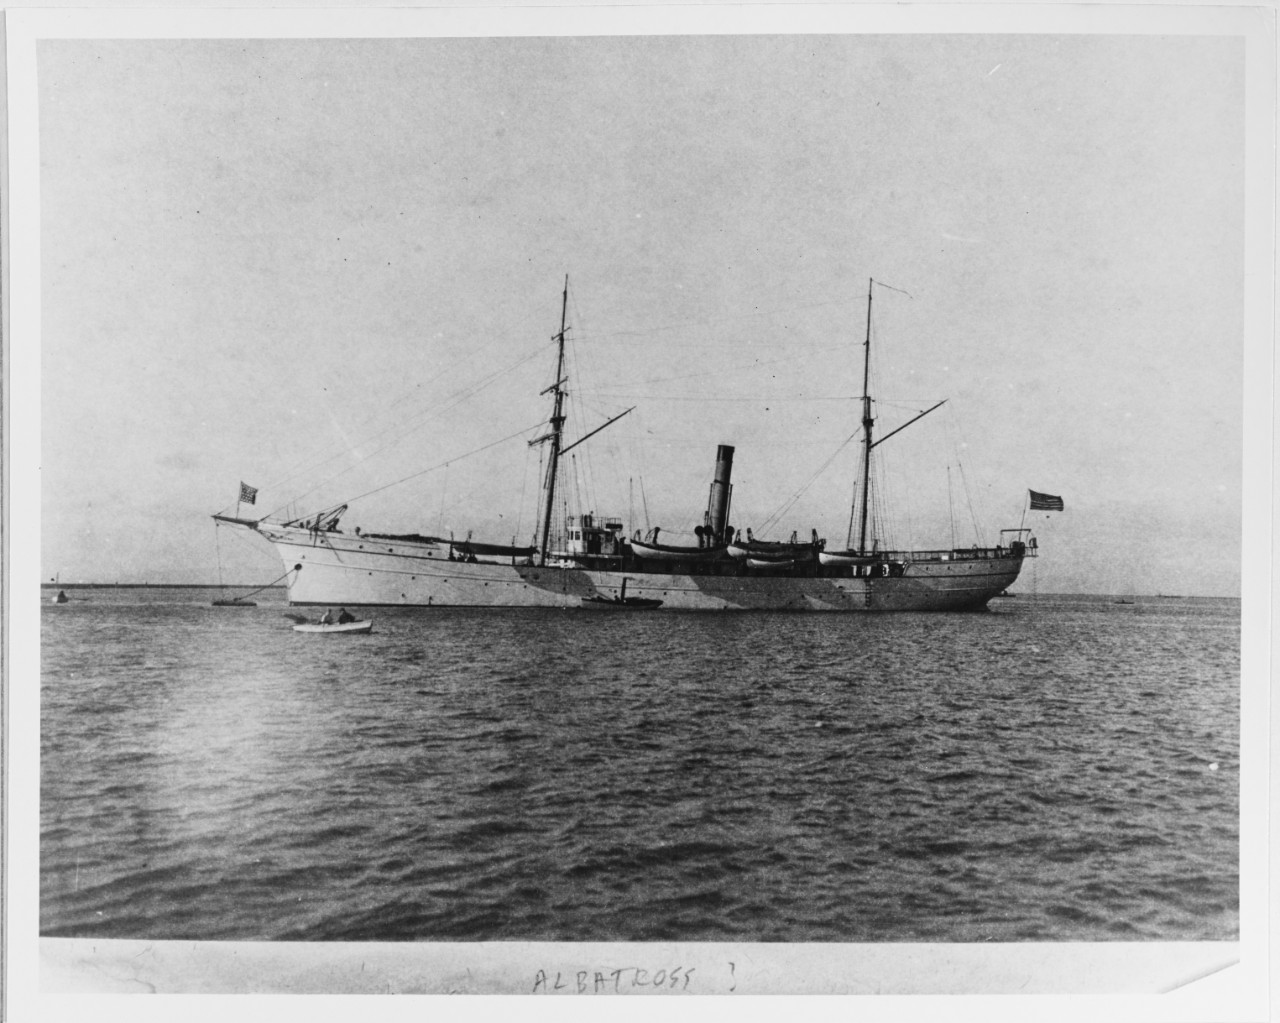 ALBATROSS, U.S. coast survey steamer